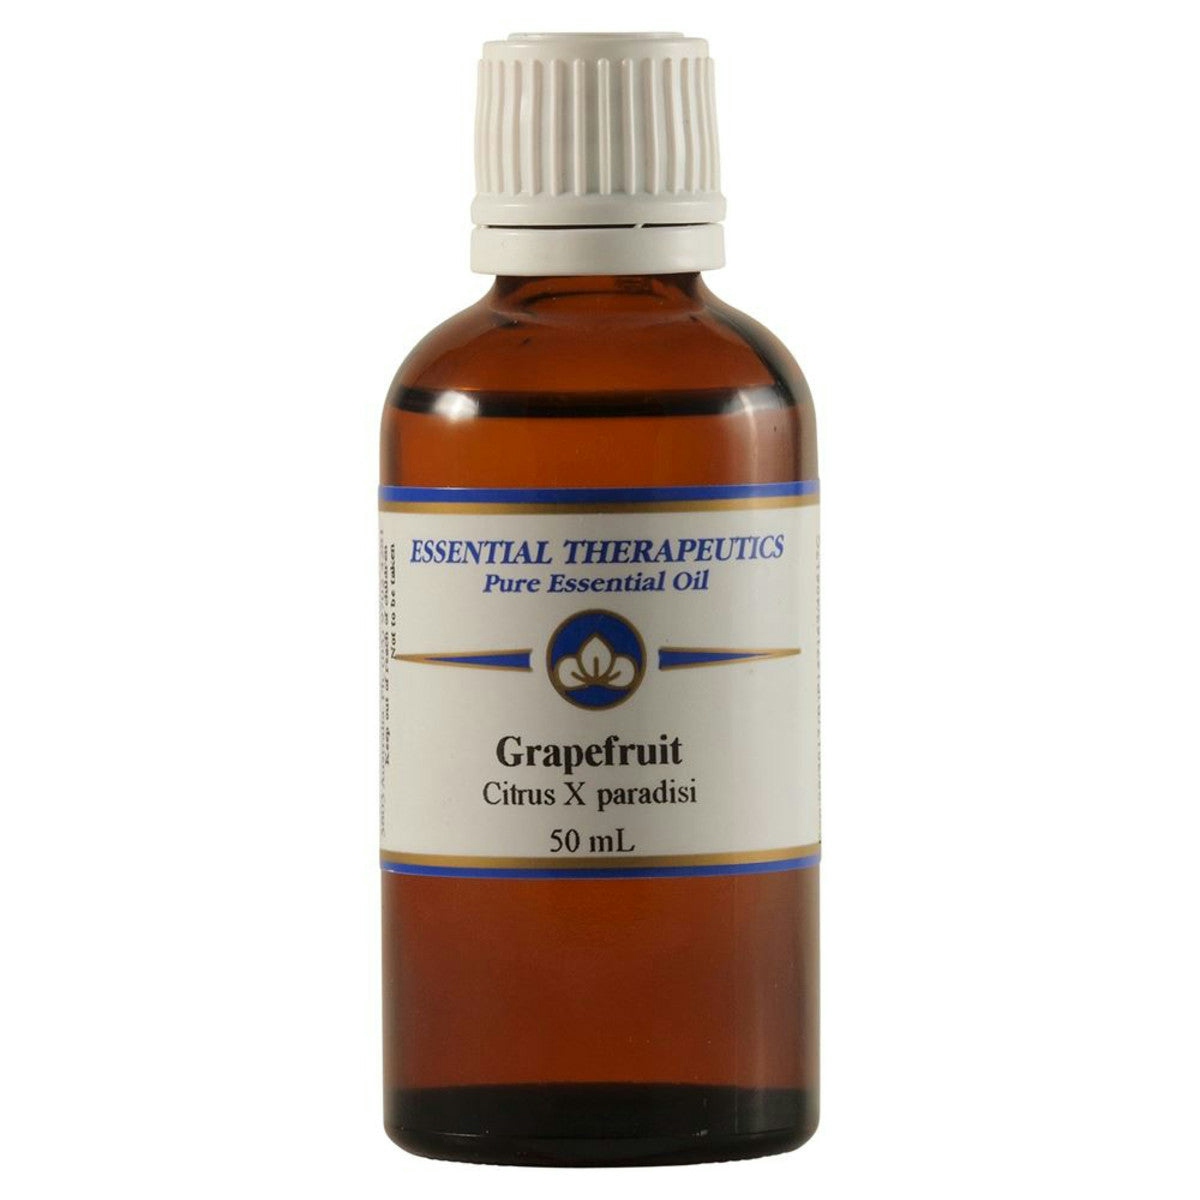 image of Essential Therapeutics Essential Oil Grapefruit 50ml on white background 